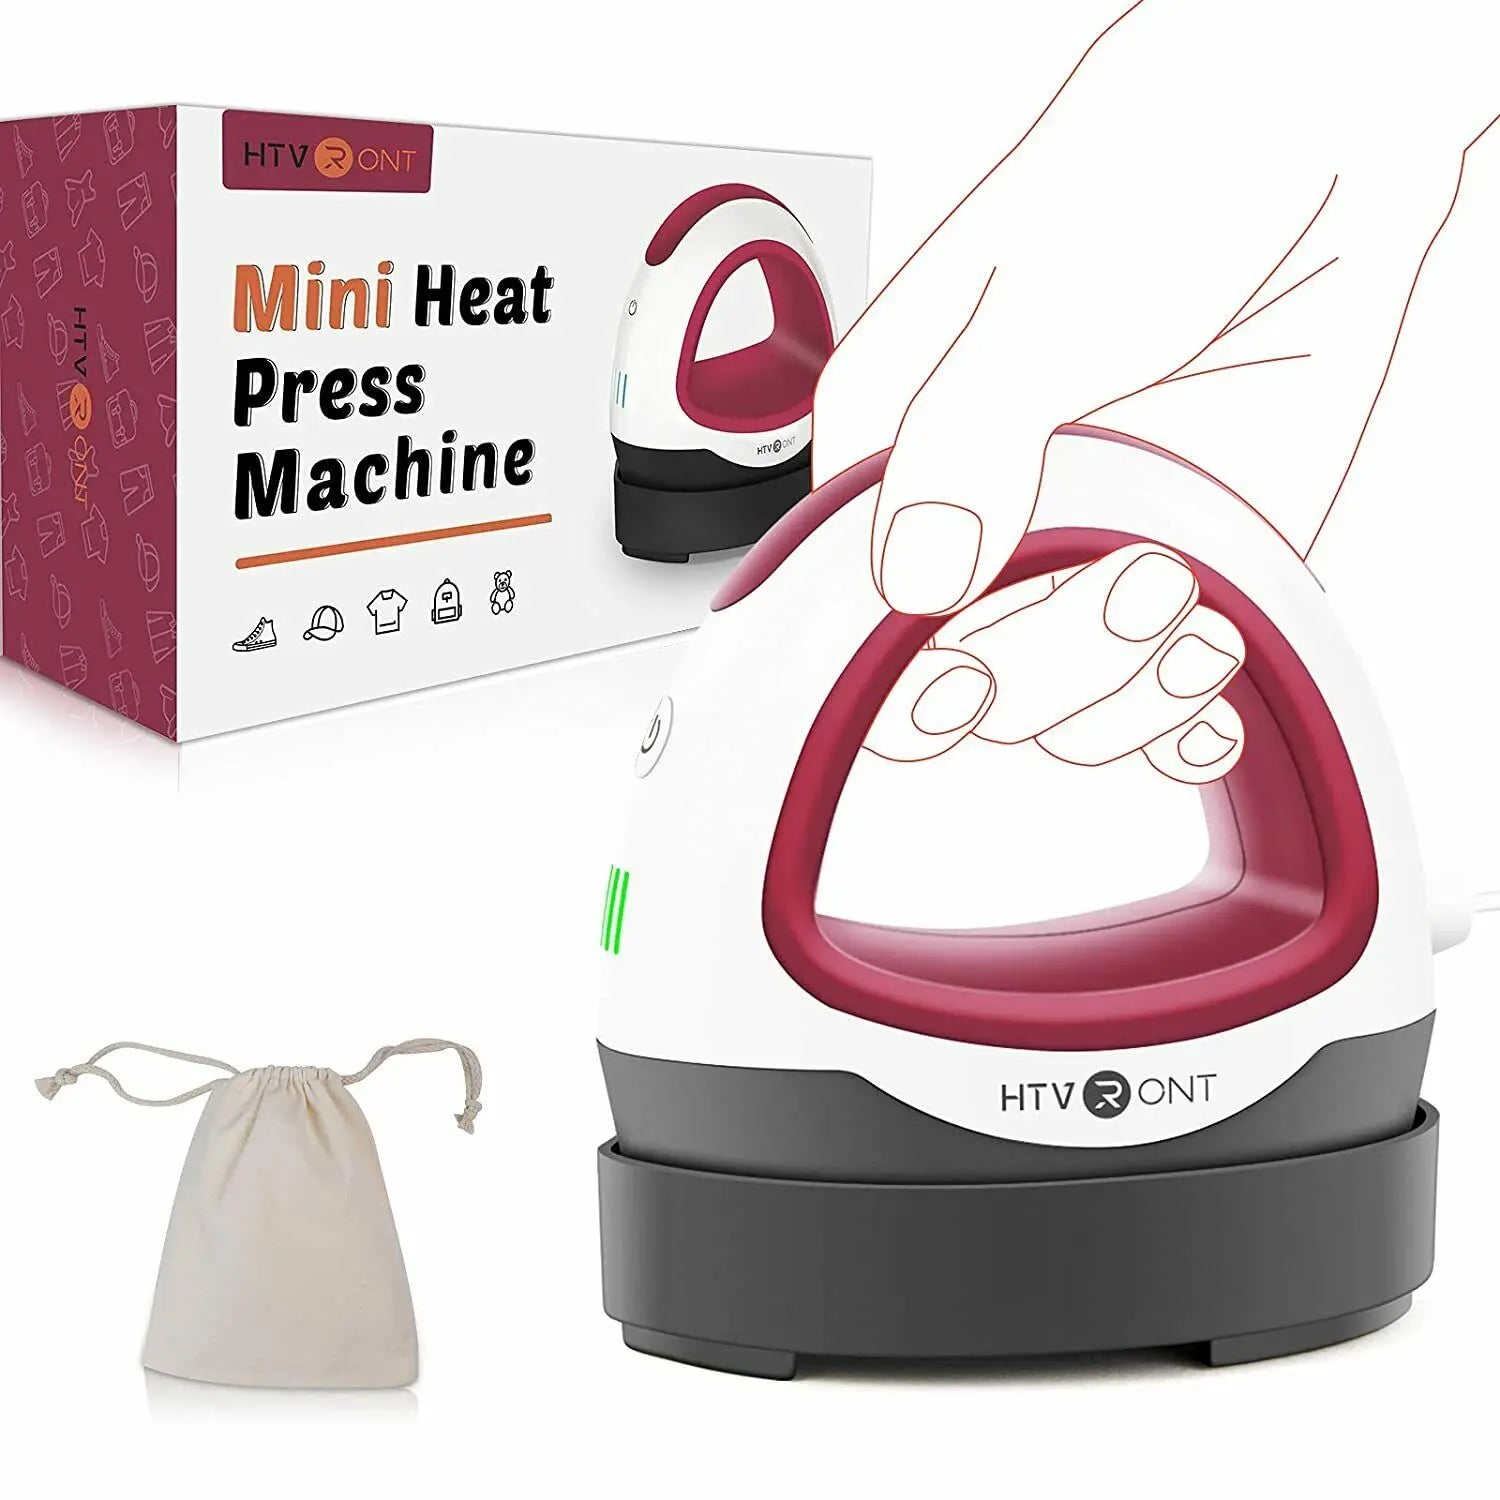 Portable MINI Heat Press Machine - DIY T-shirt Printing & Heat Transfer